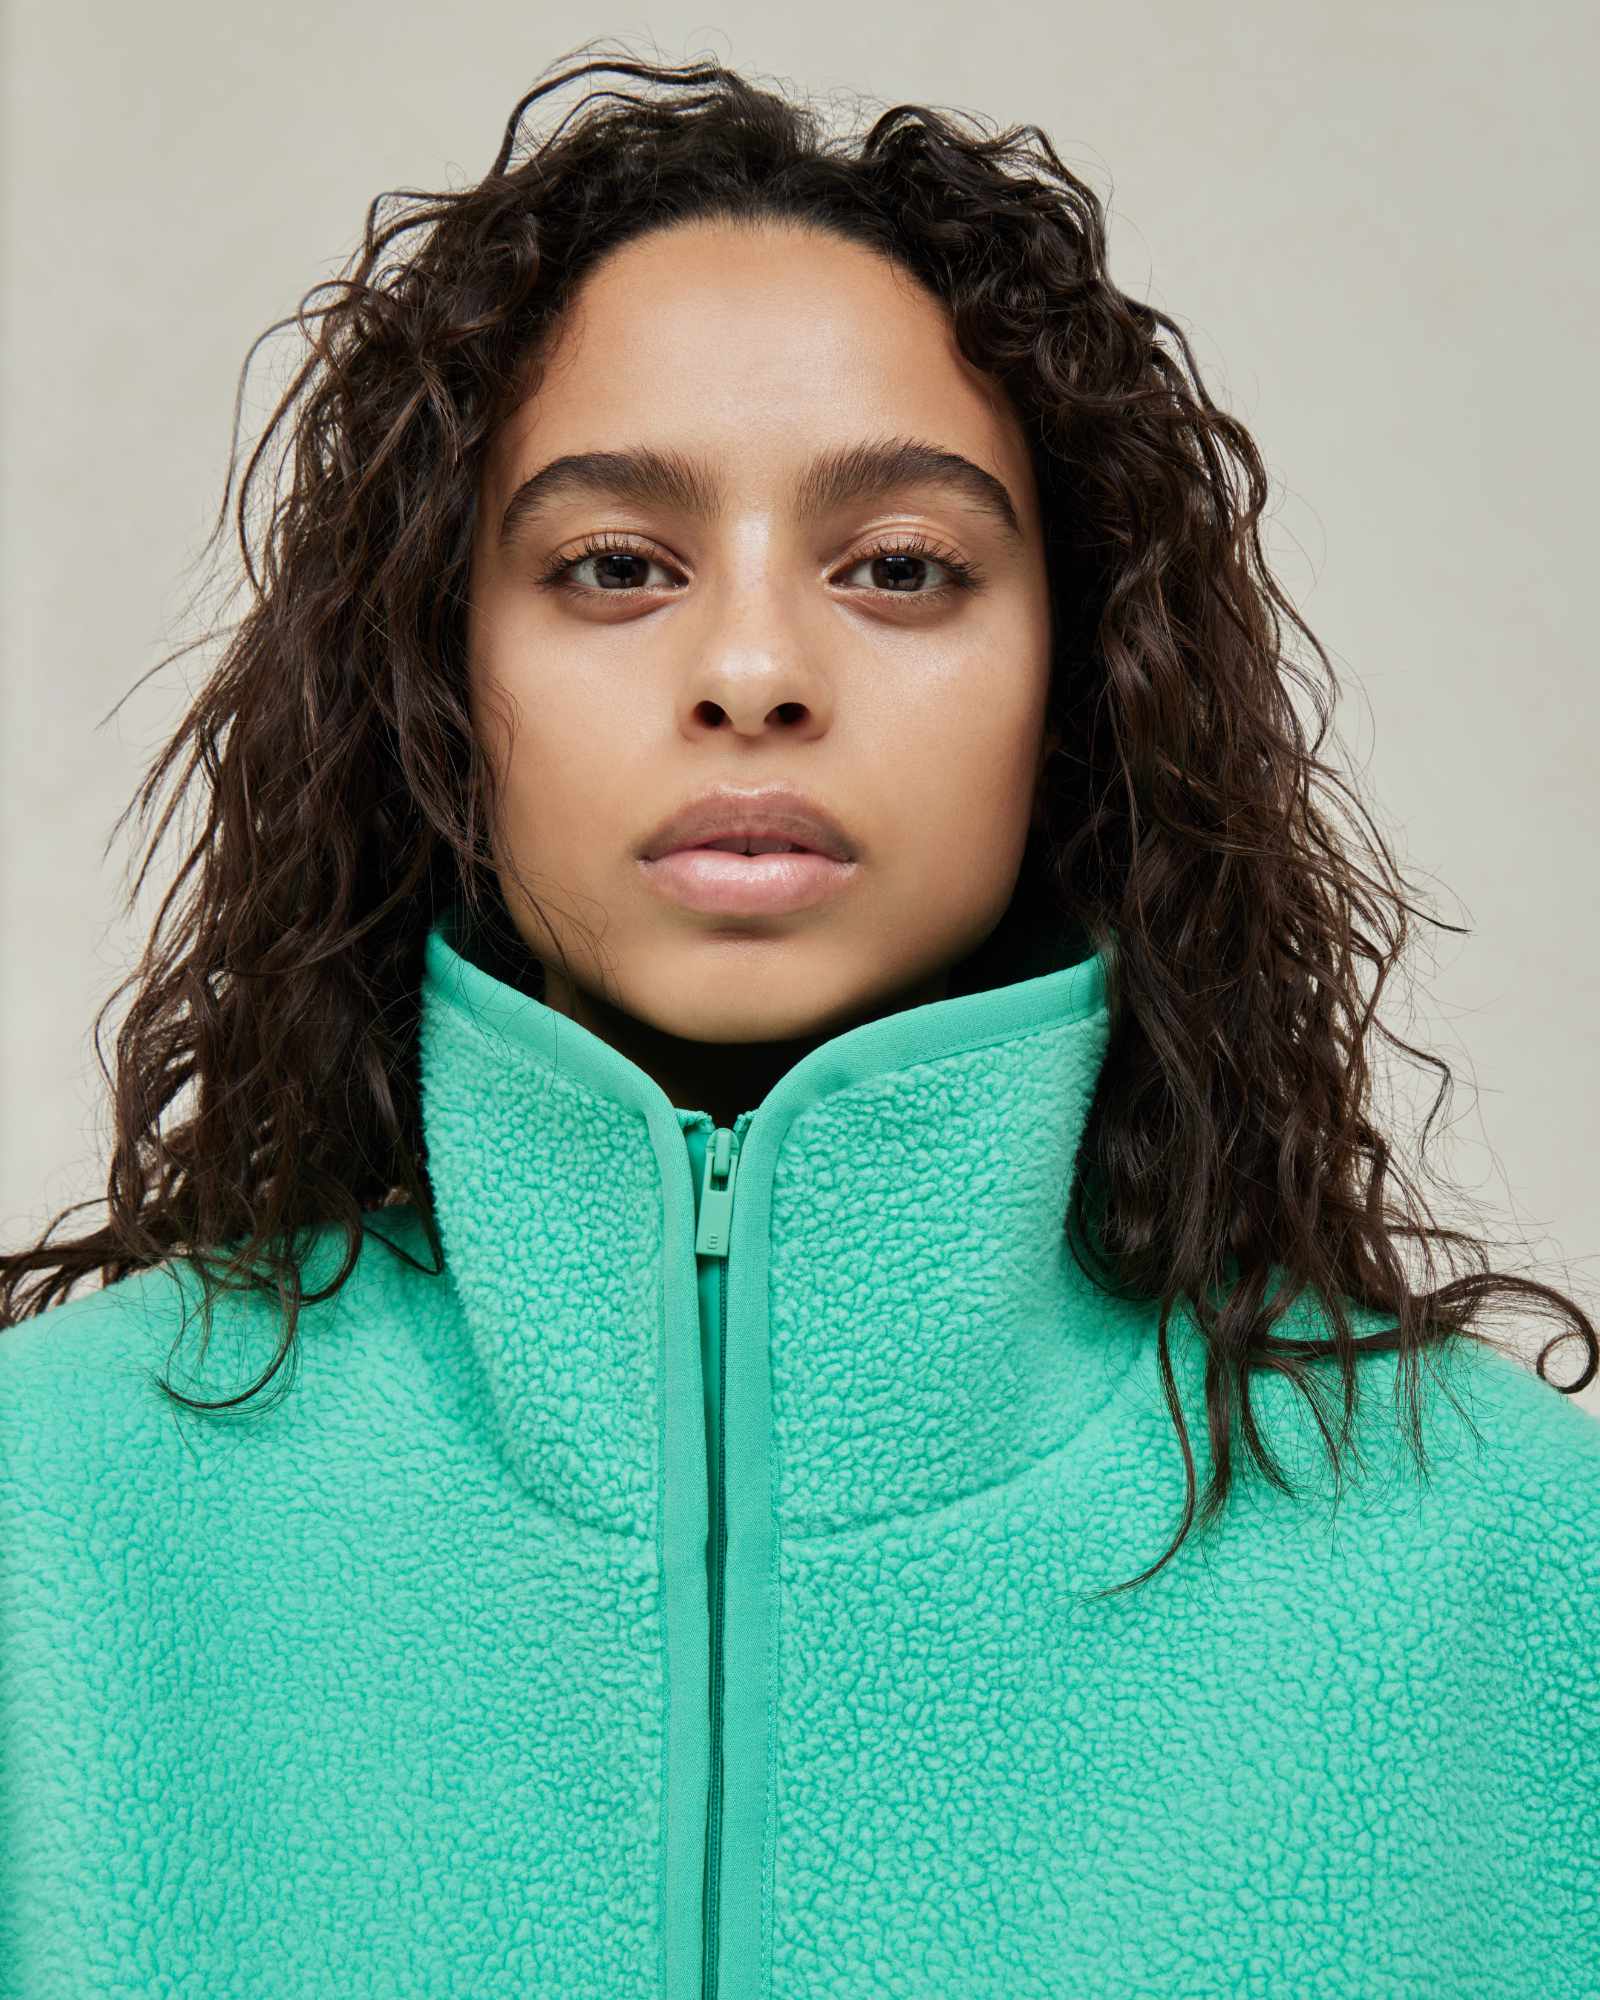 Models wear Fear of God ESSENTIALS' Winter 2023 hoodies, sweatshirts, t-shirts, and sweatpants